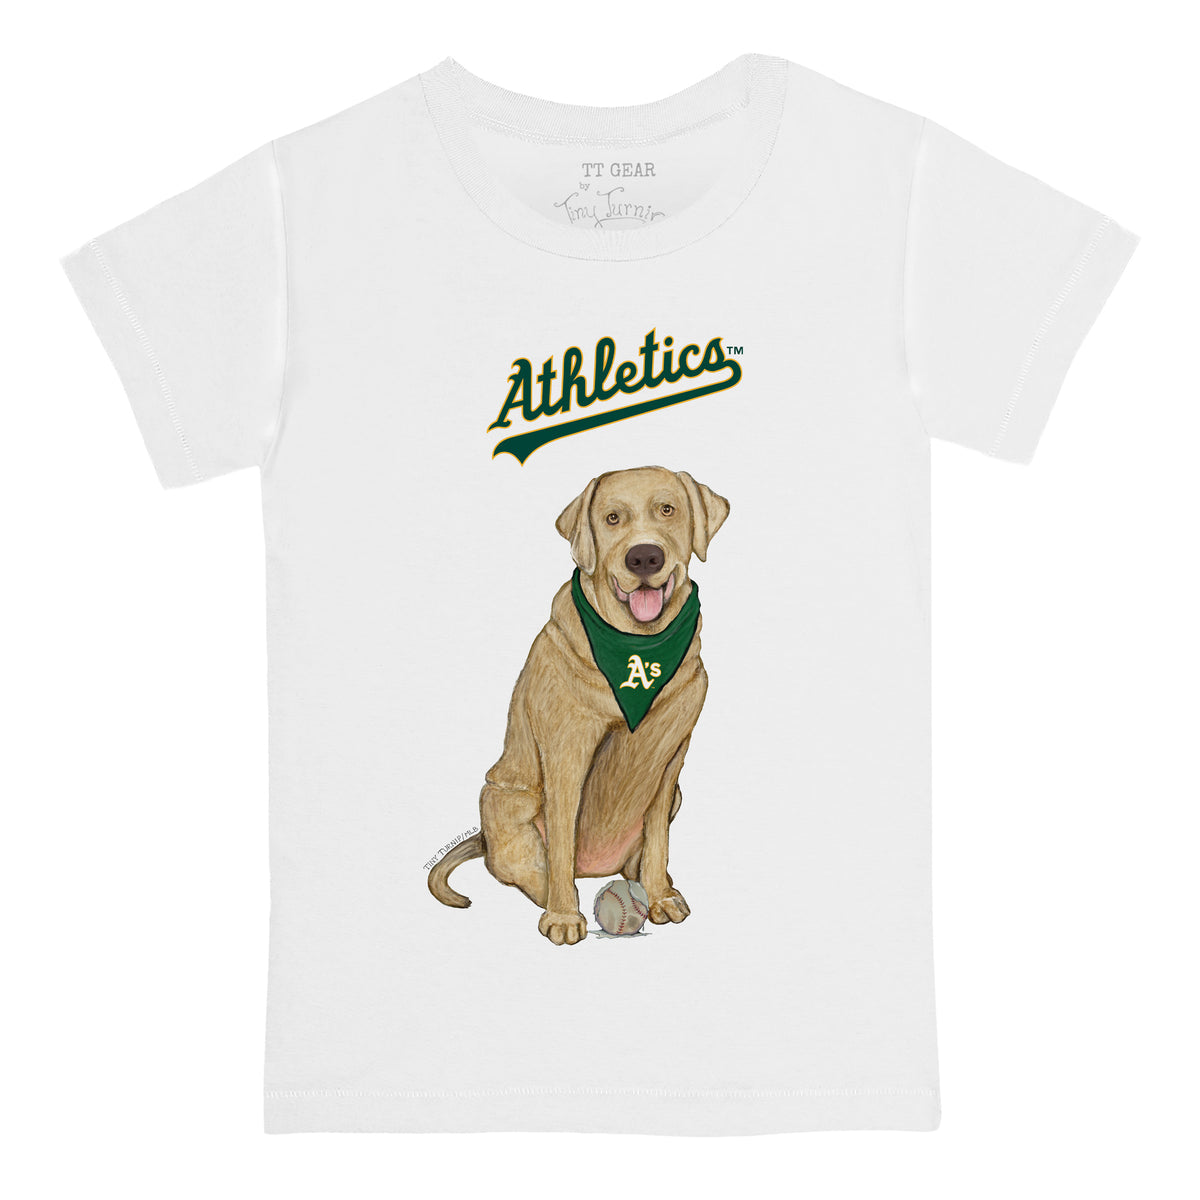 Oakland Athletics Yellow Labrador Retriever Tee Shirt